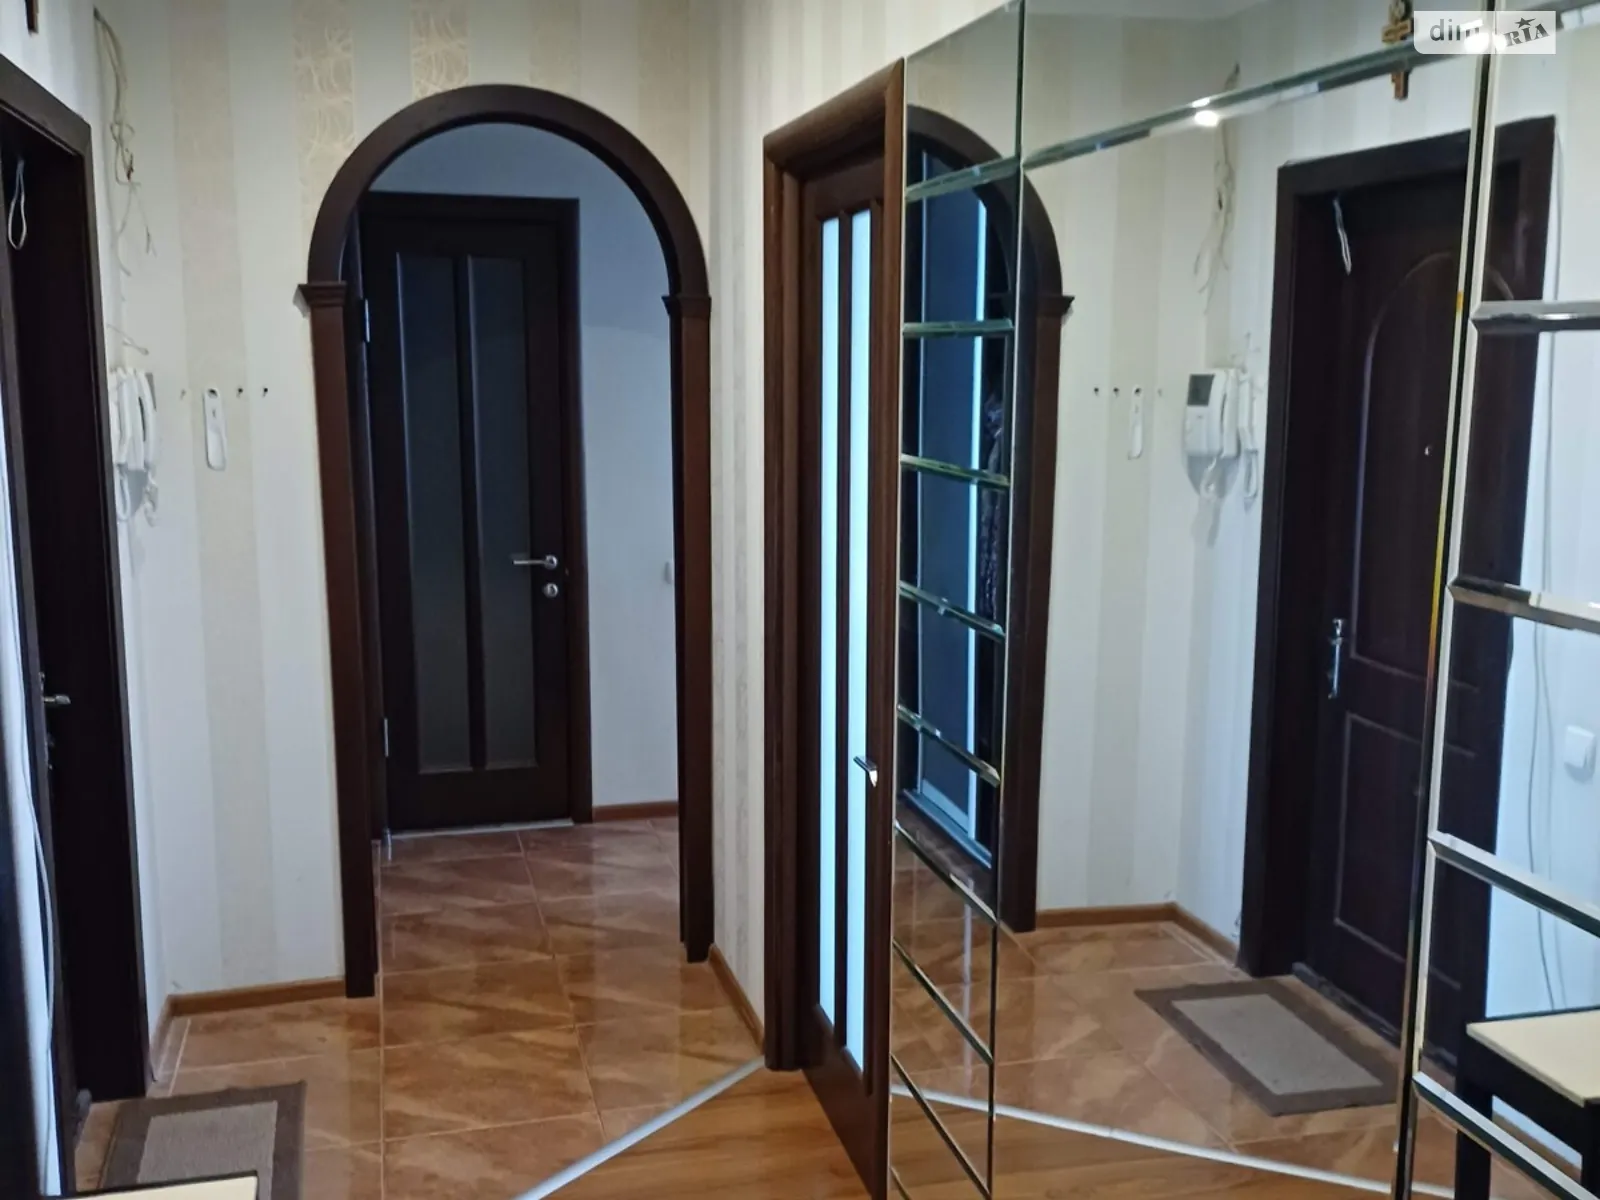 2-комнатная квартира 51.58 кв. м в Запорожье, ул. Маршала Судца, 9 - фото 1